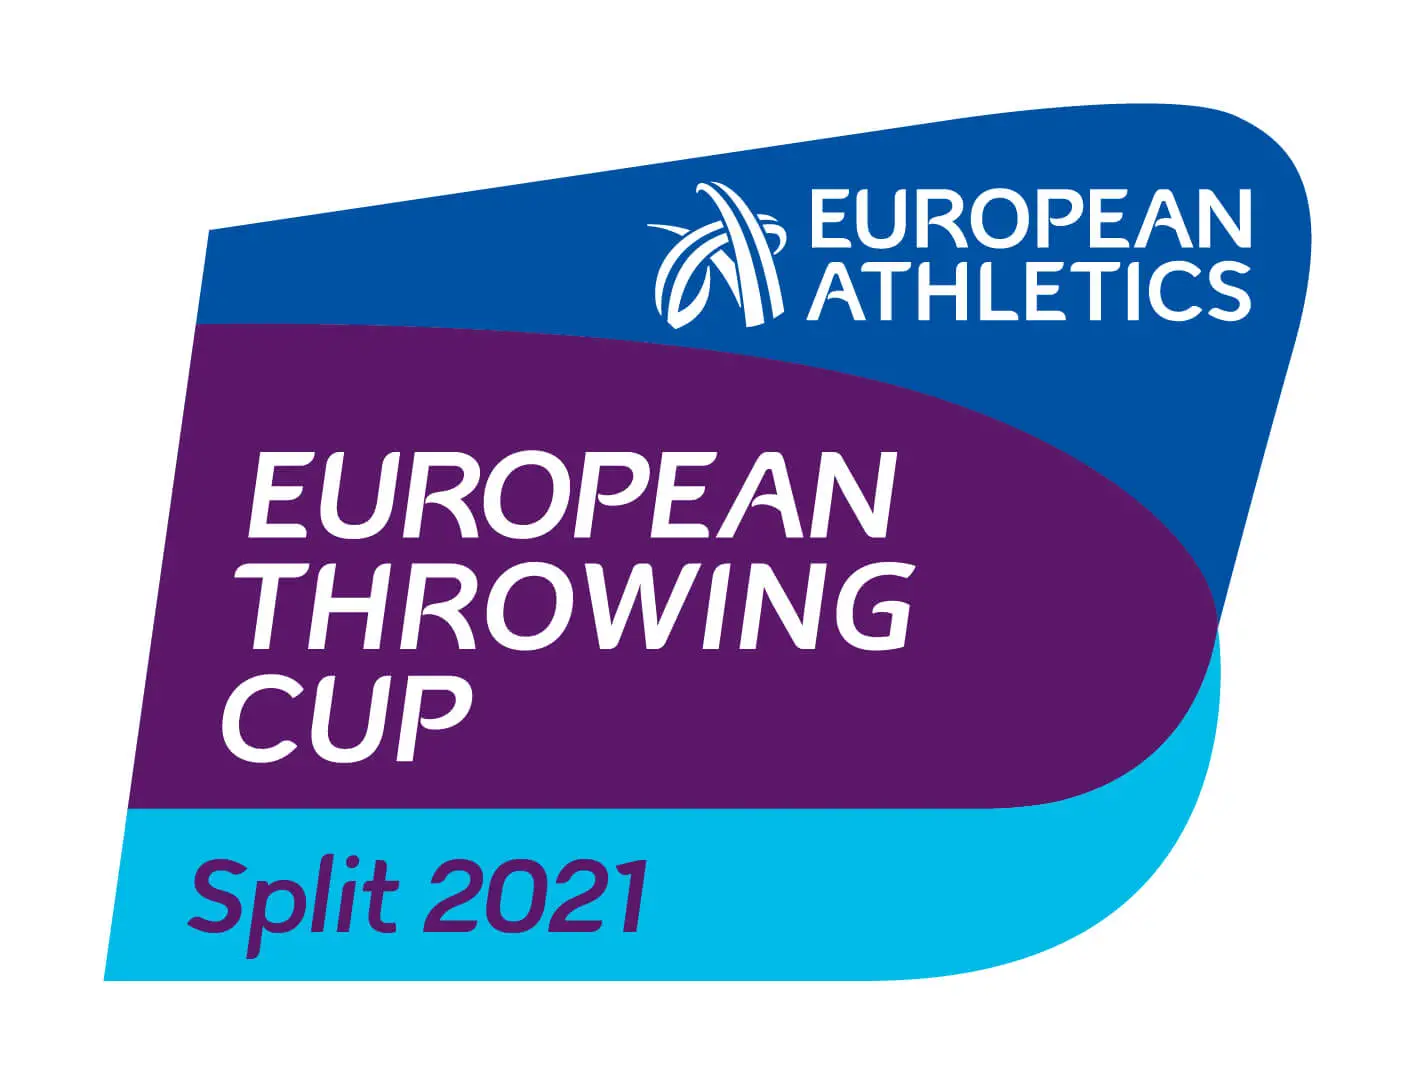 European Throwing Cup 2021 | European Athletics